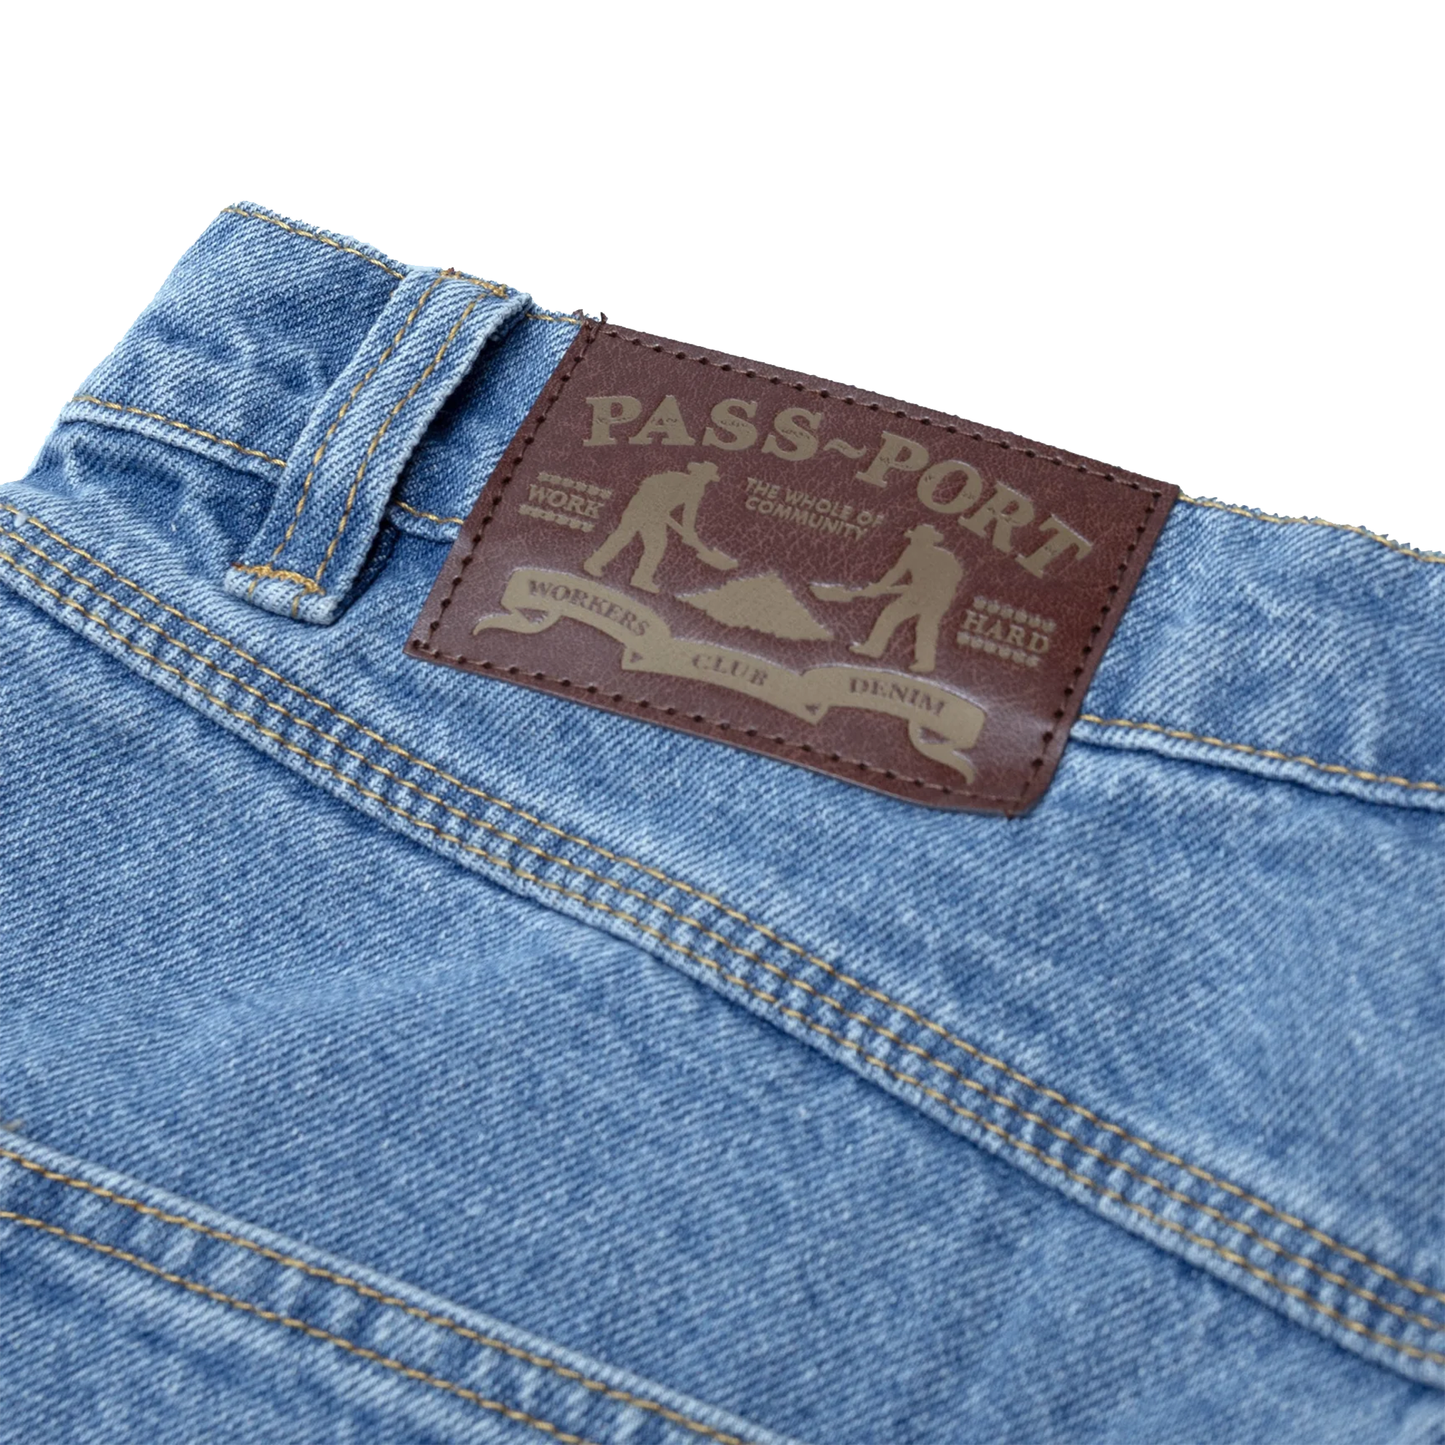 Passport Workers Club Denim Jeans - Light Indigo